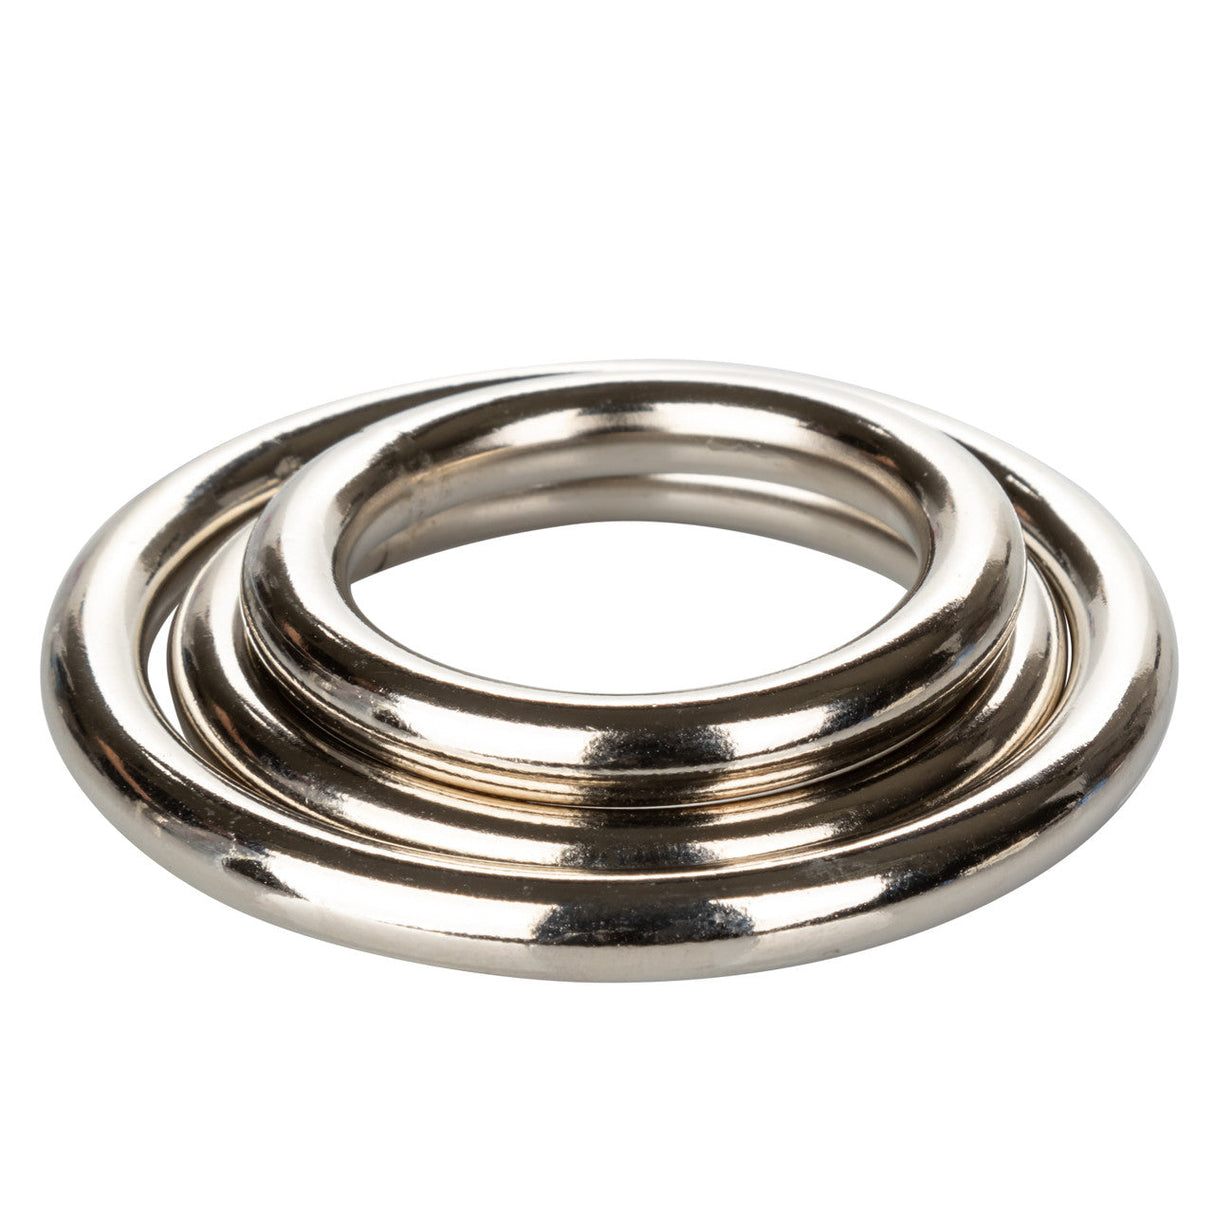 Silver Rings Metal Cock Ring Set